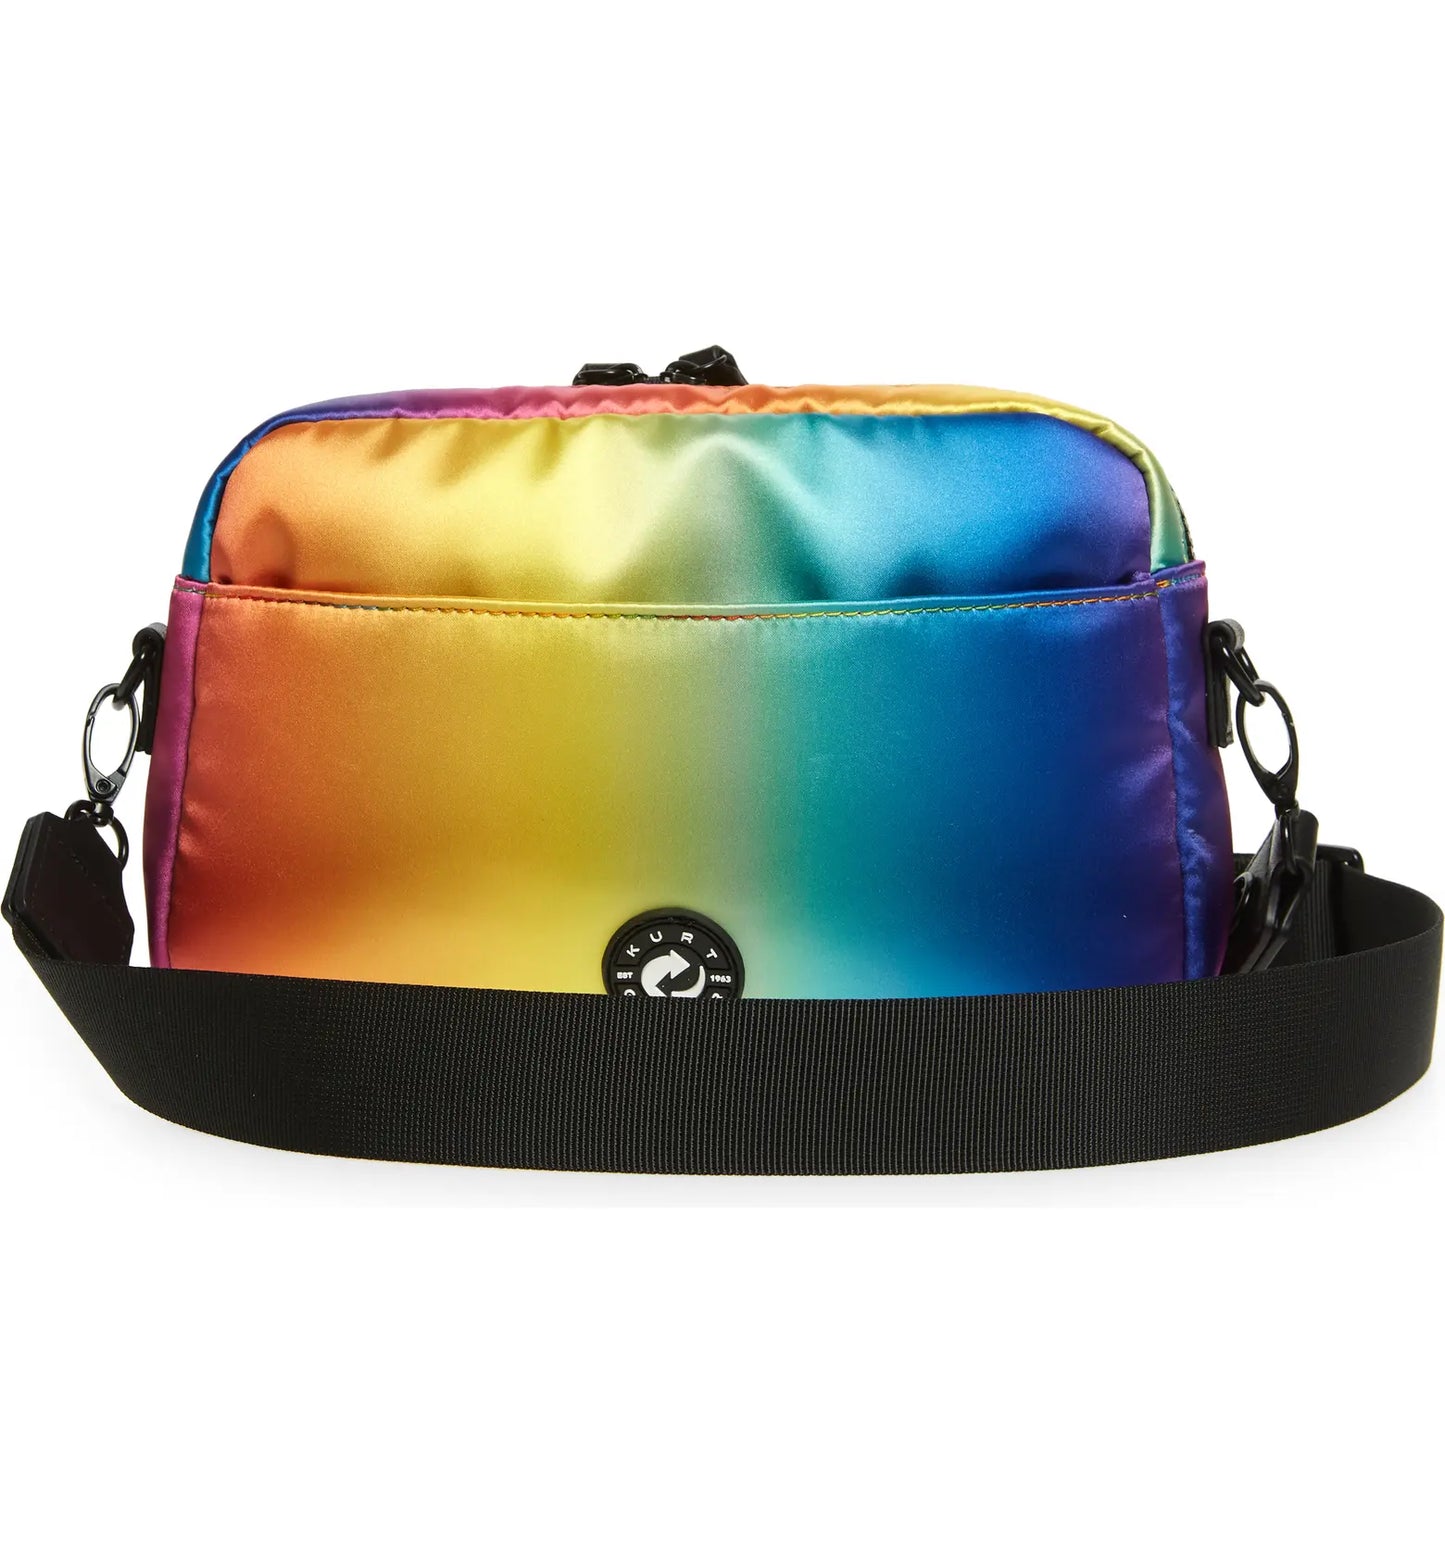 
                  
                    Kurt Geiger London Rainbow Crossbody Bag
                  
                